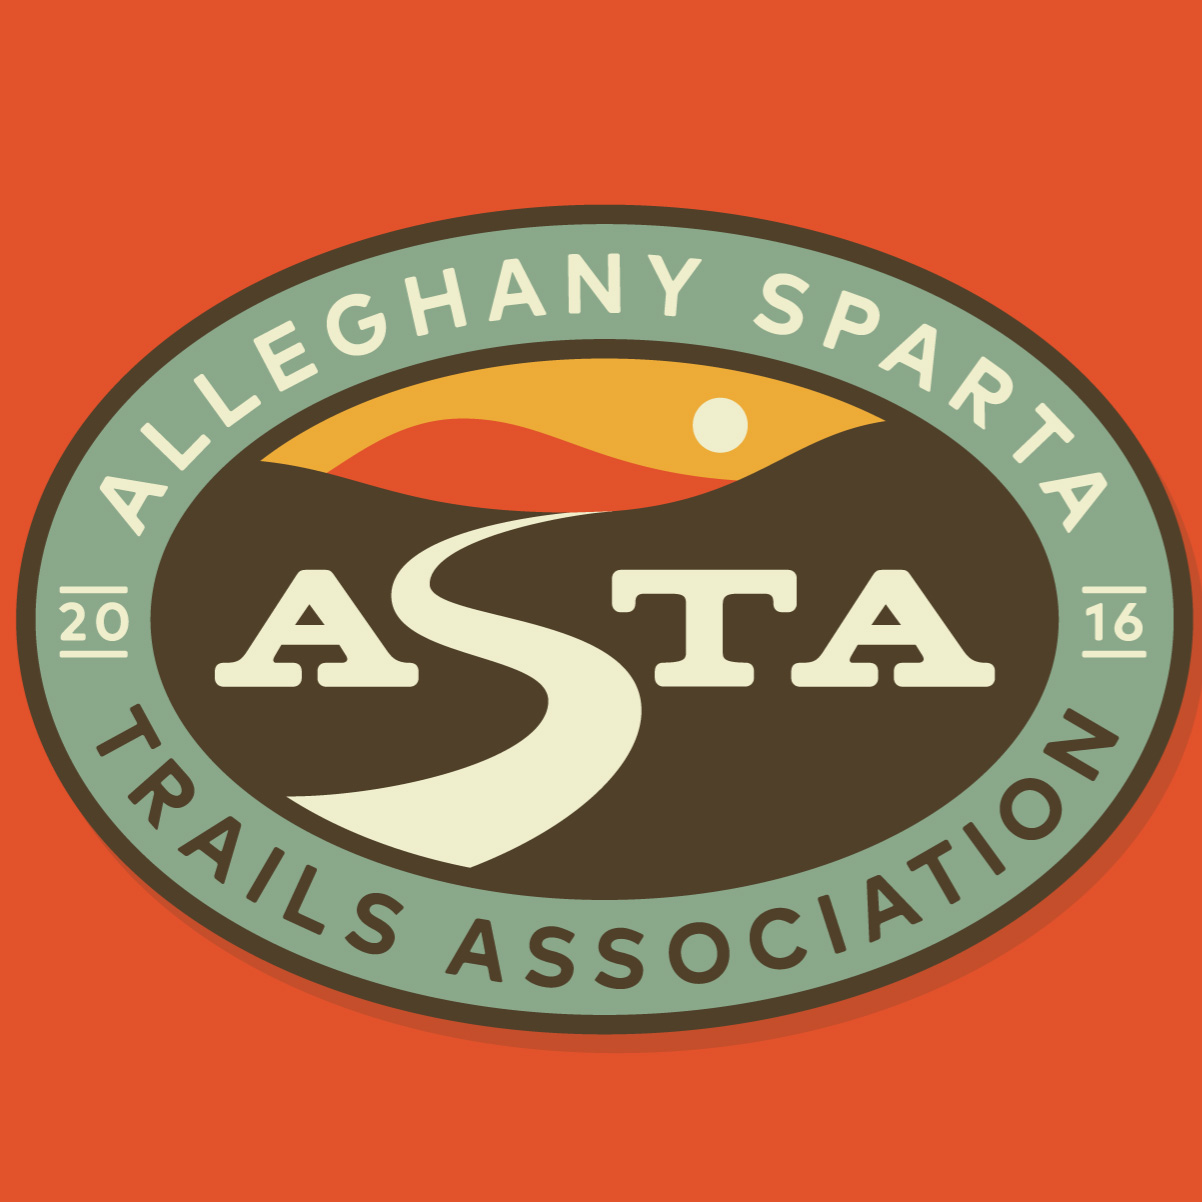 Alleghany Sparta Trail Association.jpg